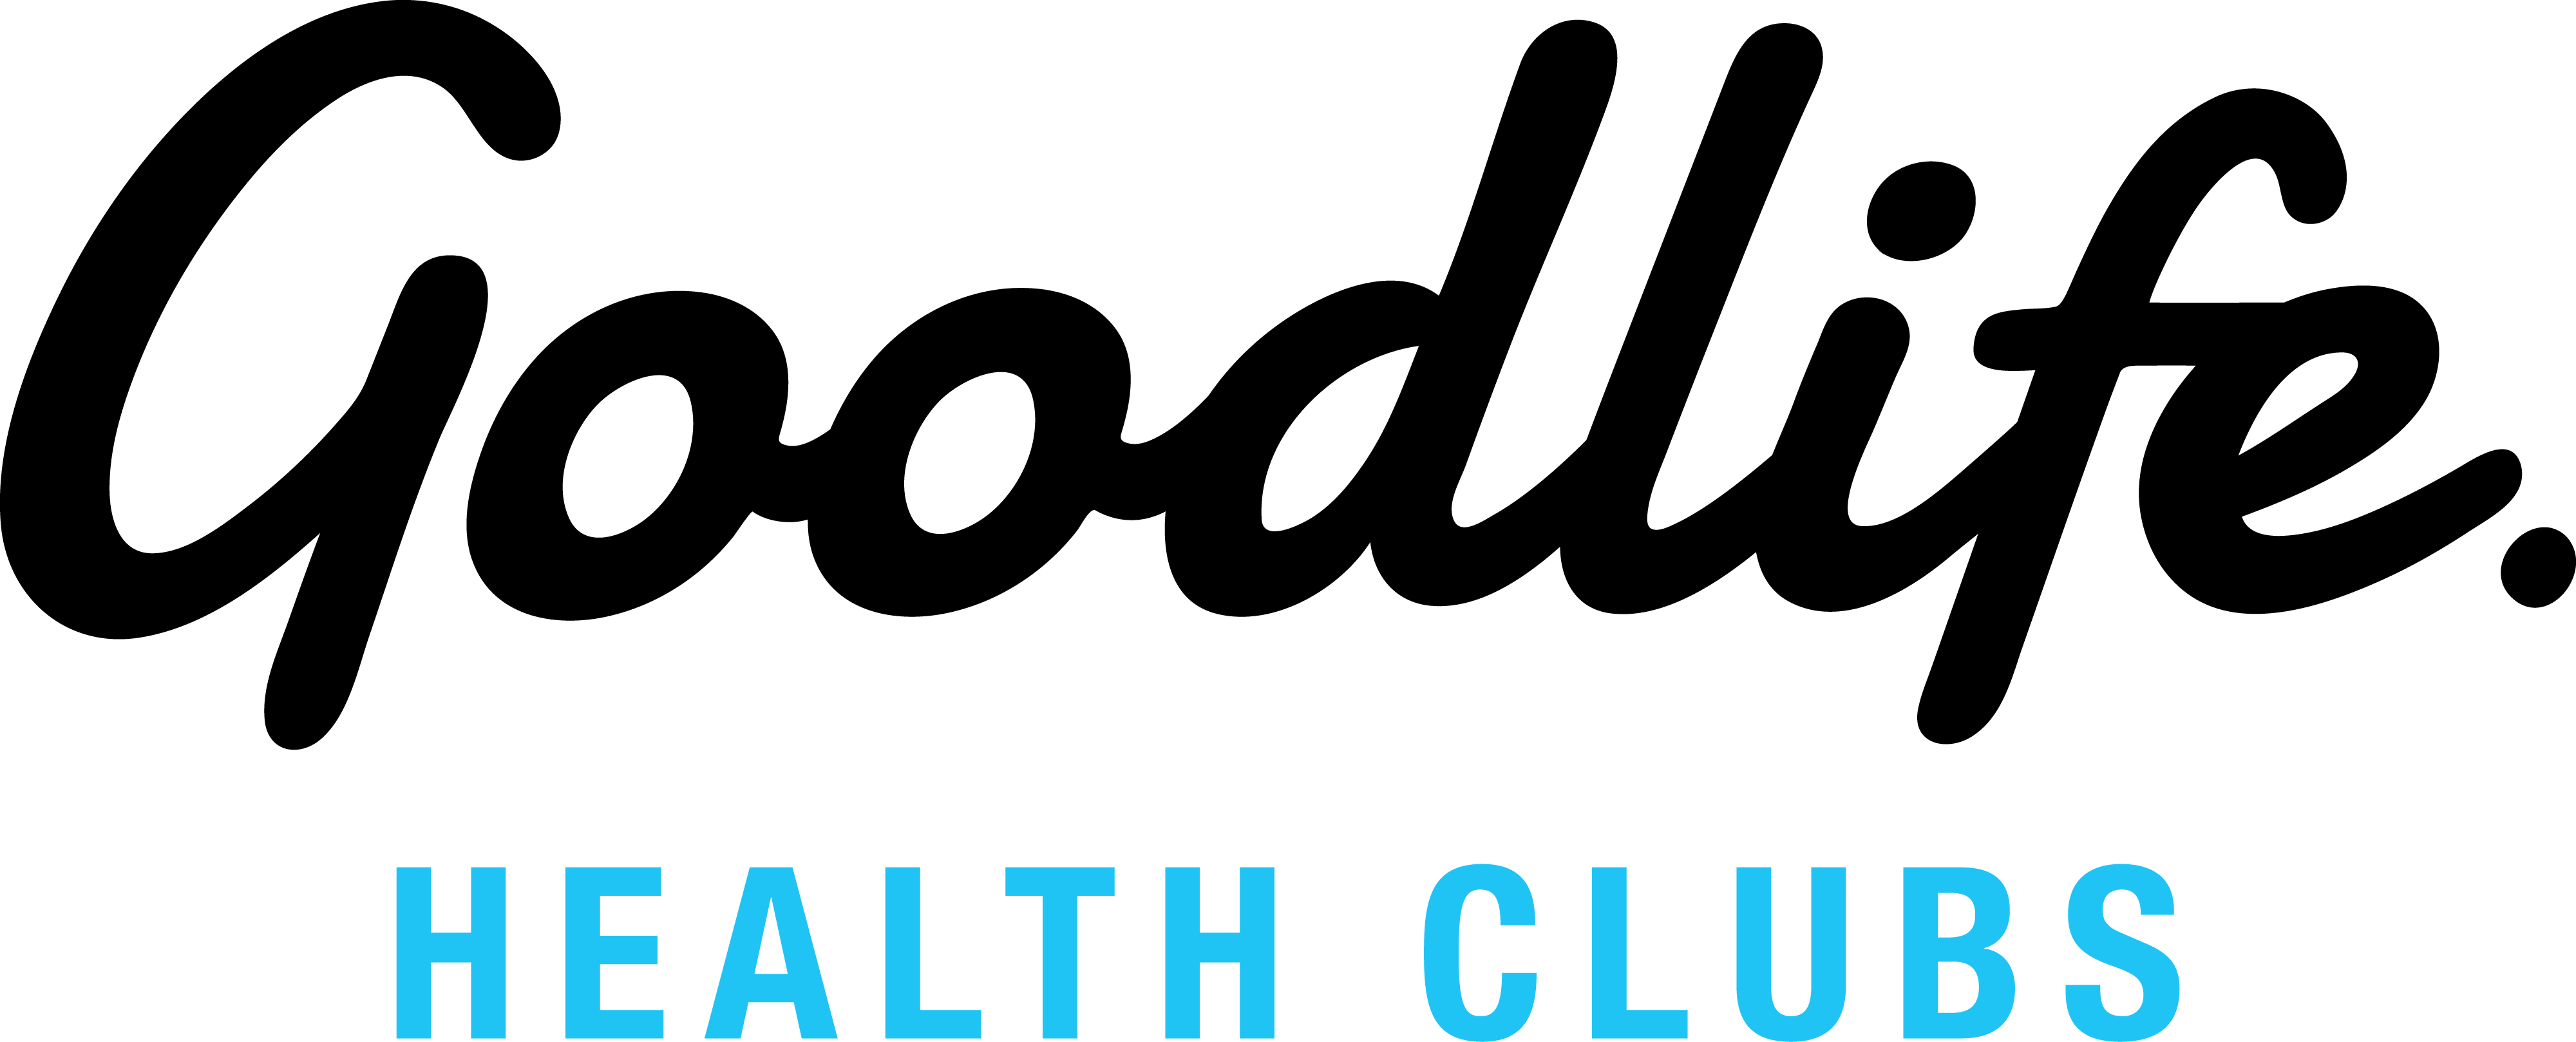 download health club